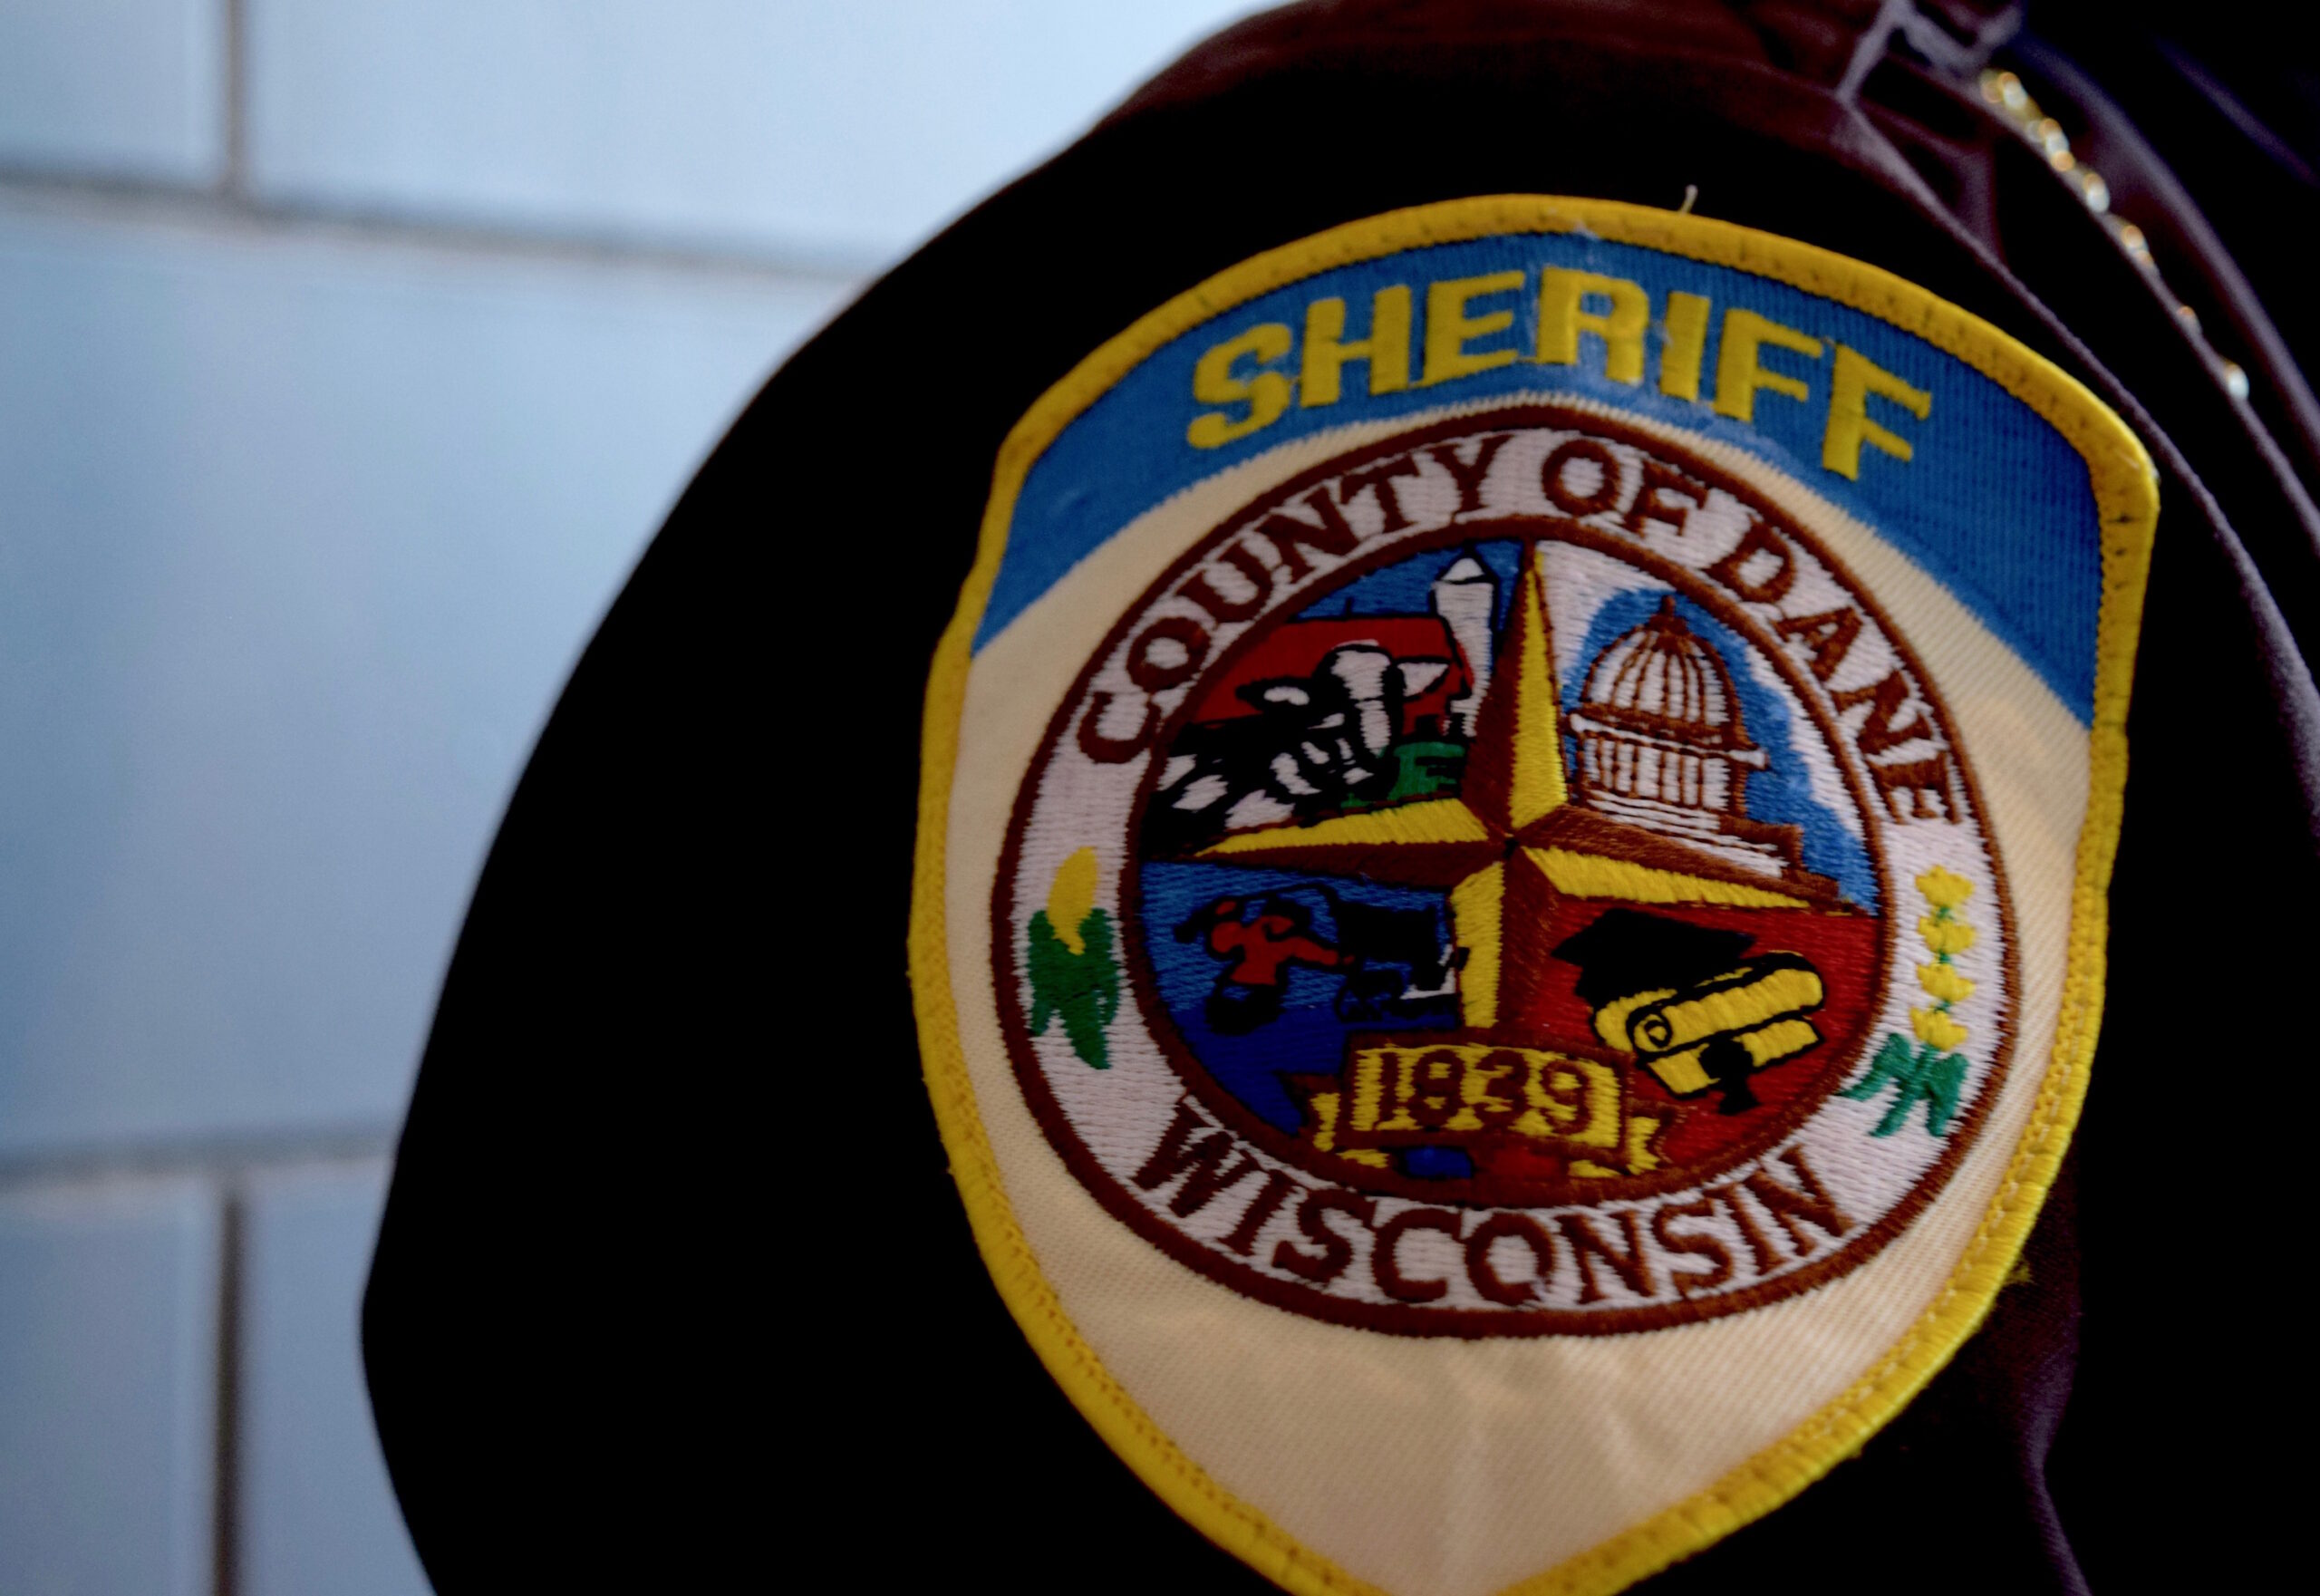 A Dane County sheriff's deputy uniform insignia